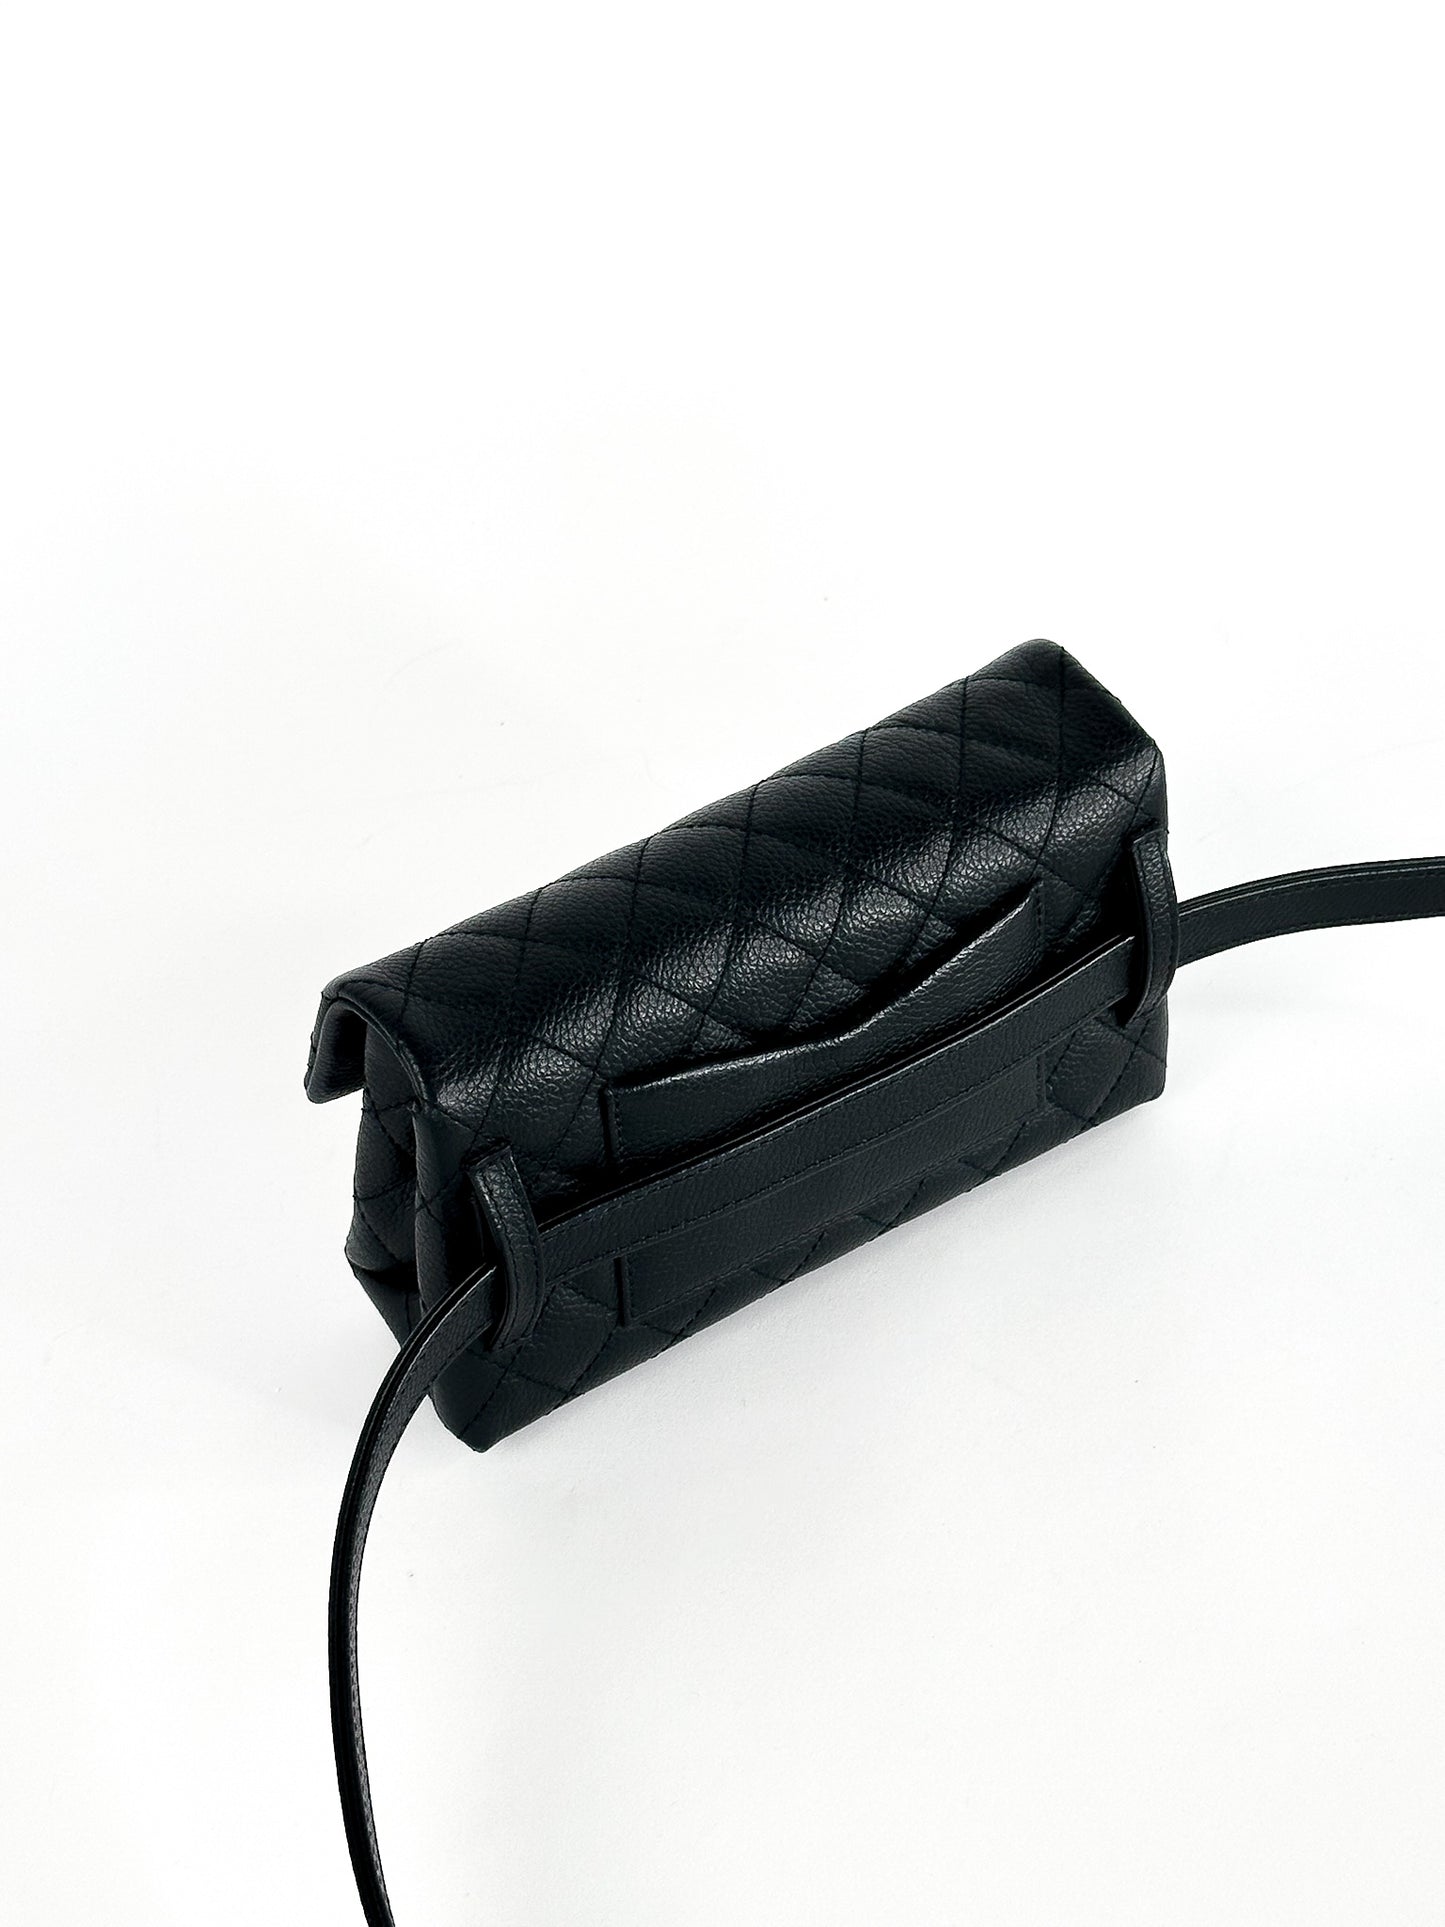 Chanel Uniform Caviar Leather Black Belt Bag Silver Hardware